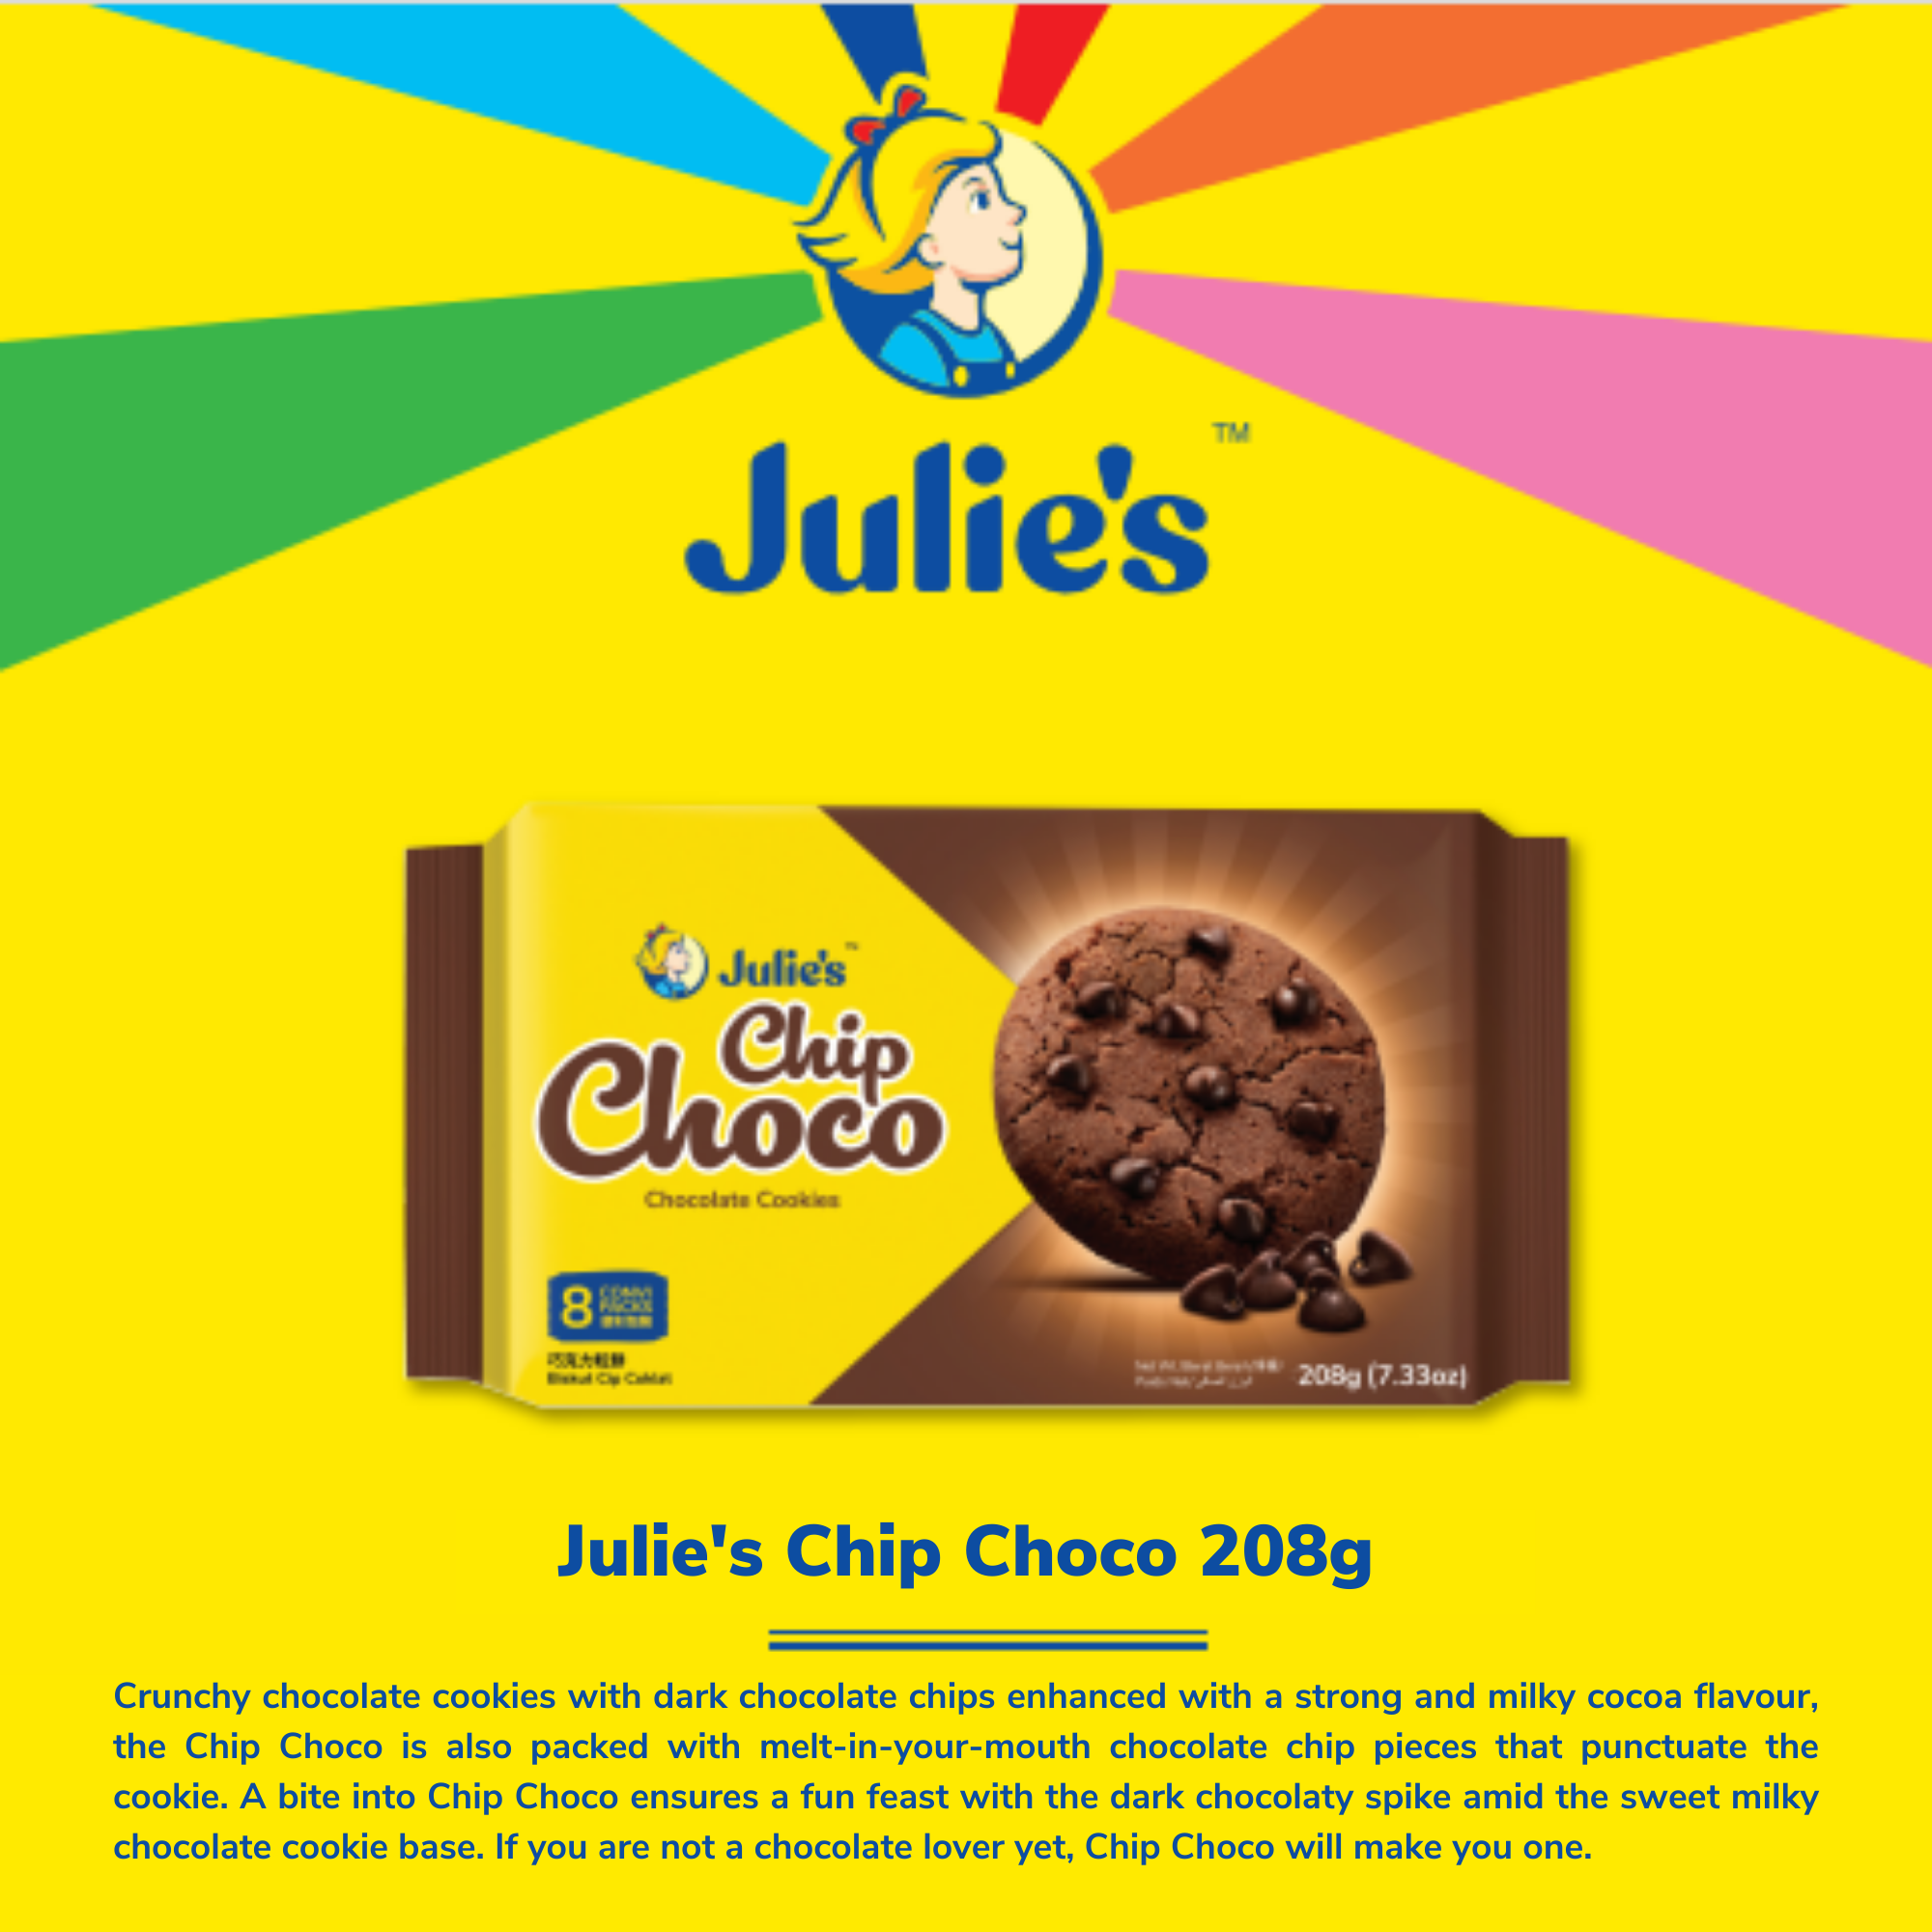 Julie's Chip Choco 208g x 1 pack